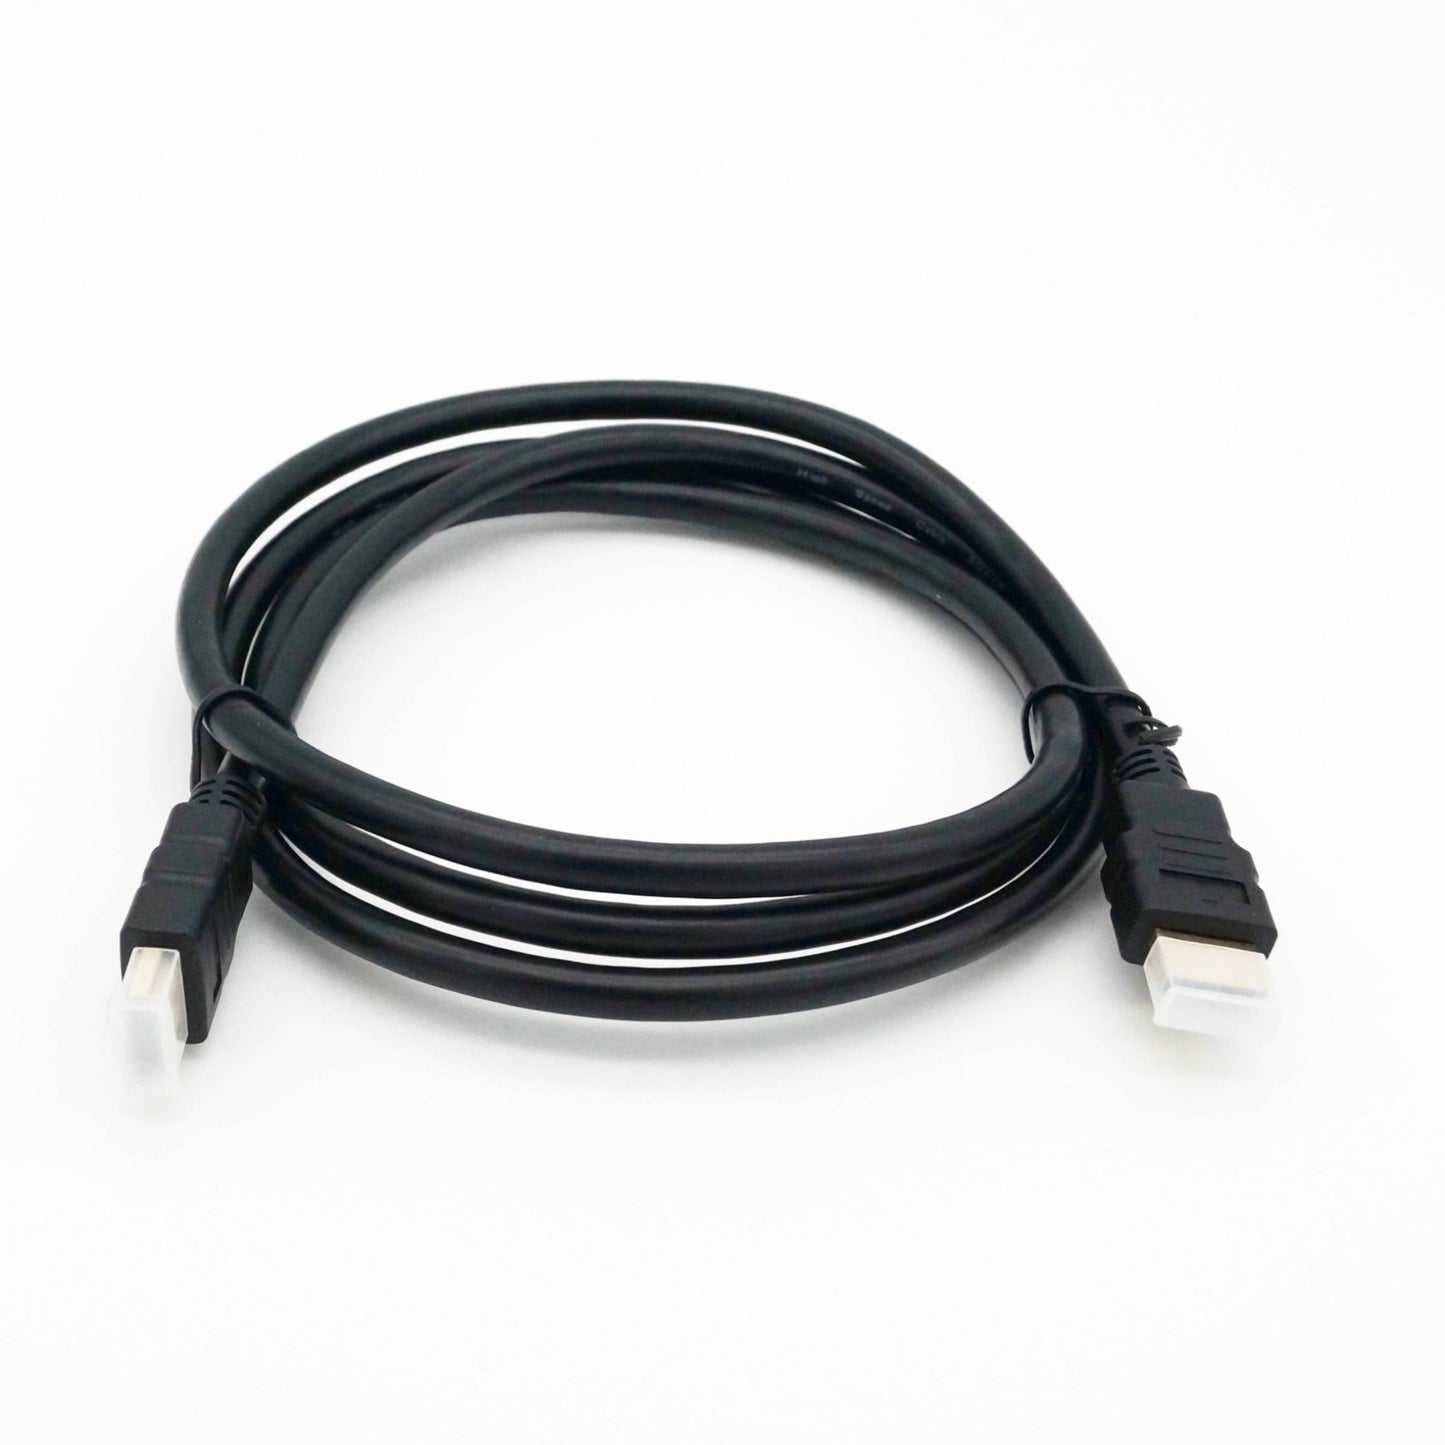 3' HDMI Cable